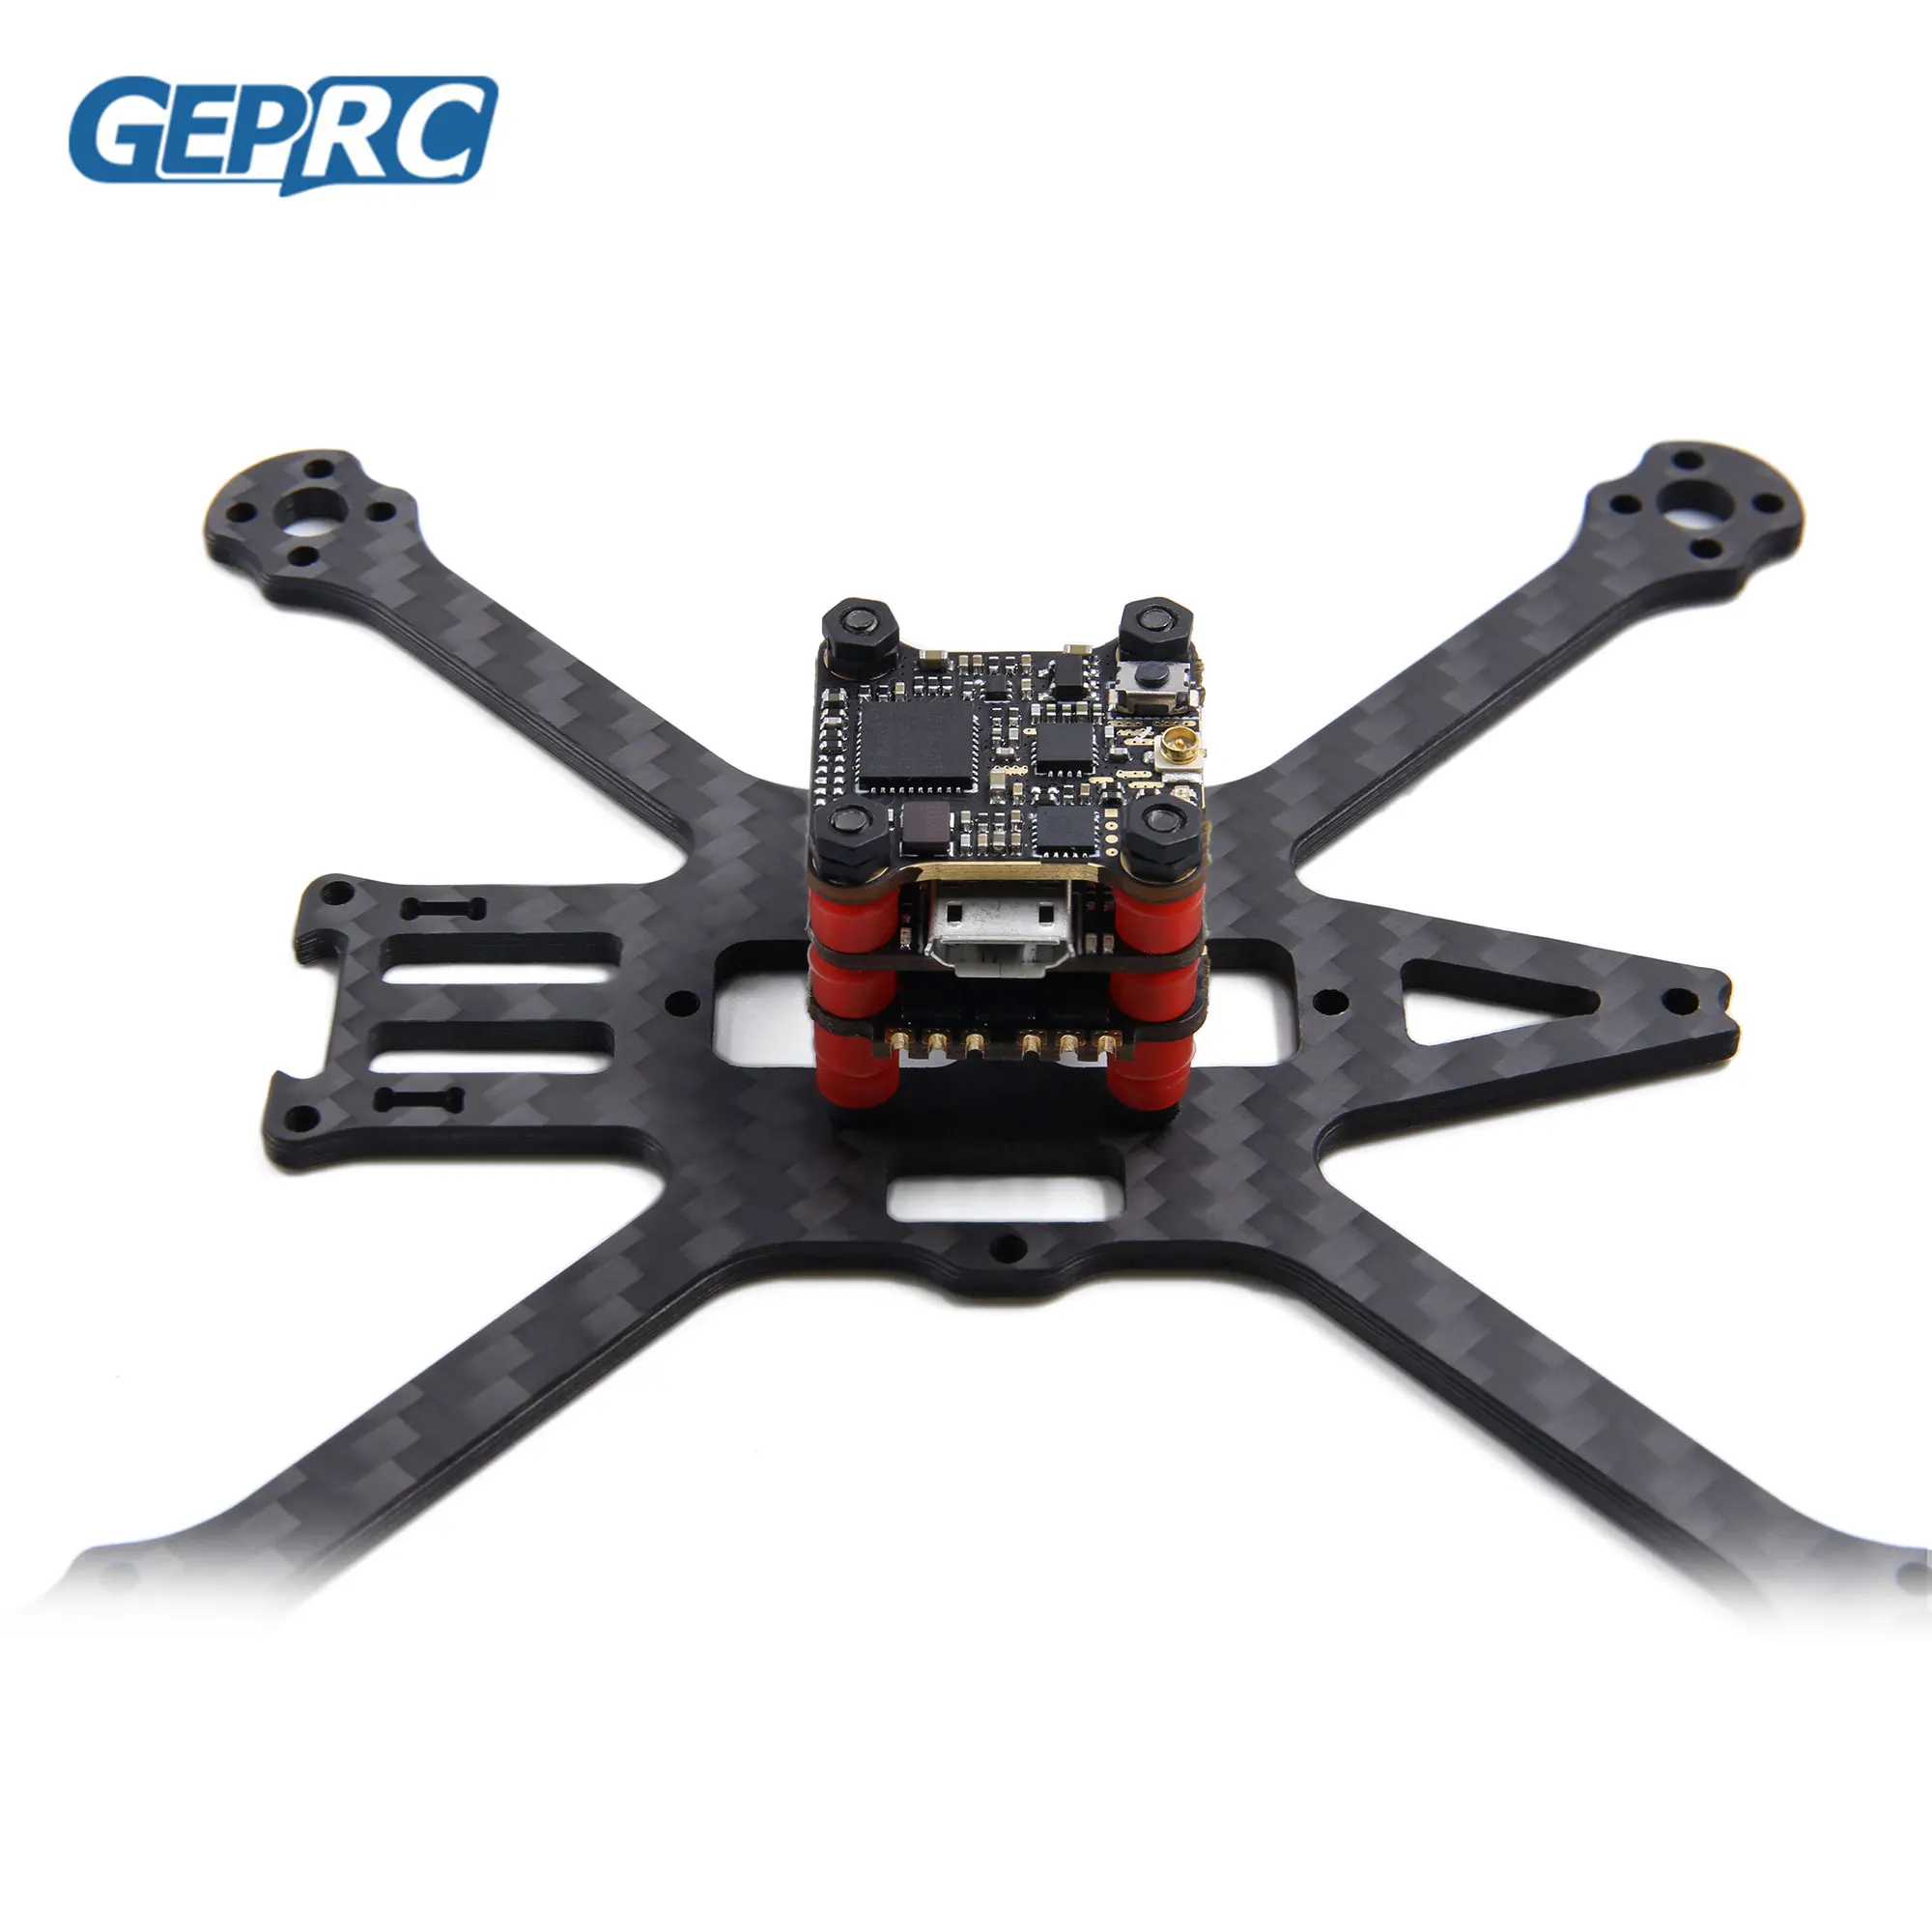 GEPRC KARARLI F411Stack F411 uçuş kontrol 12A 4İN1 ESC desteği IRC TRAMP protokolü FPV uçan kule yarış drone